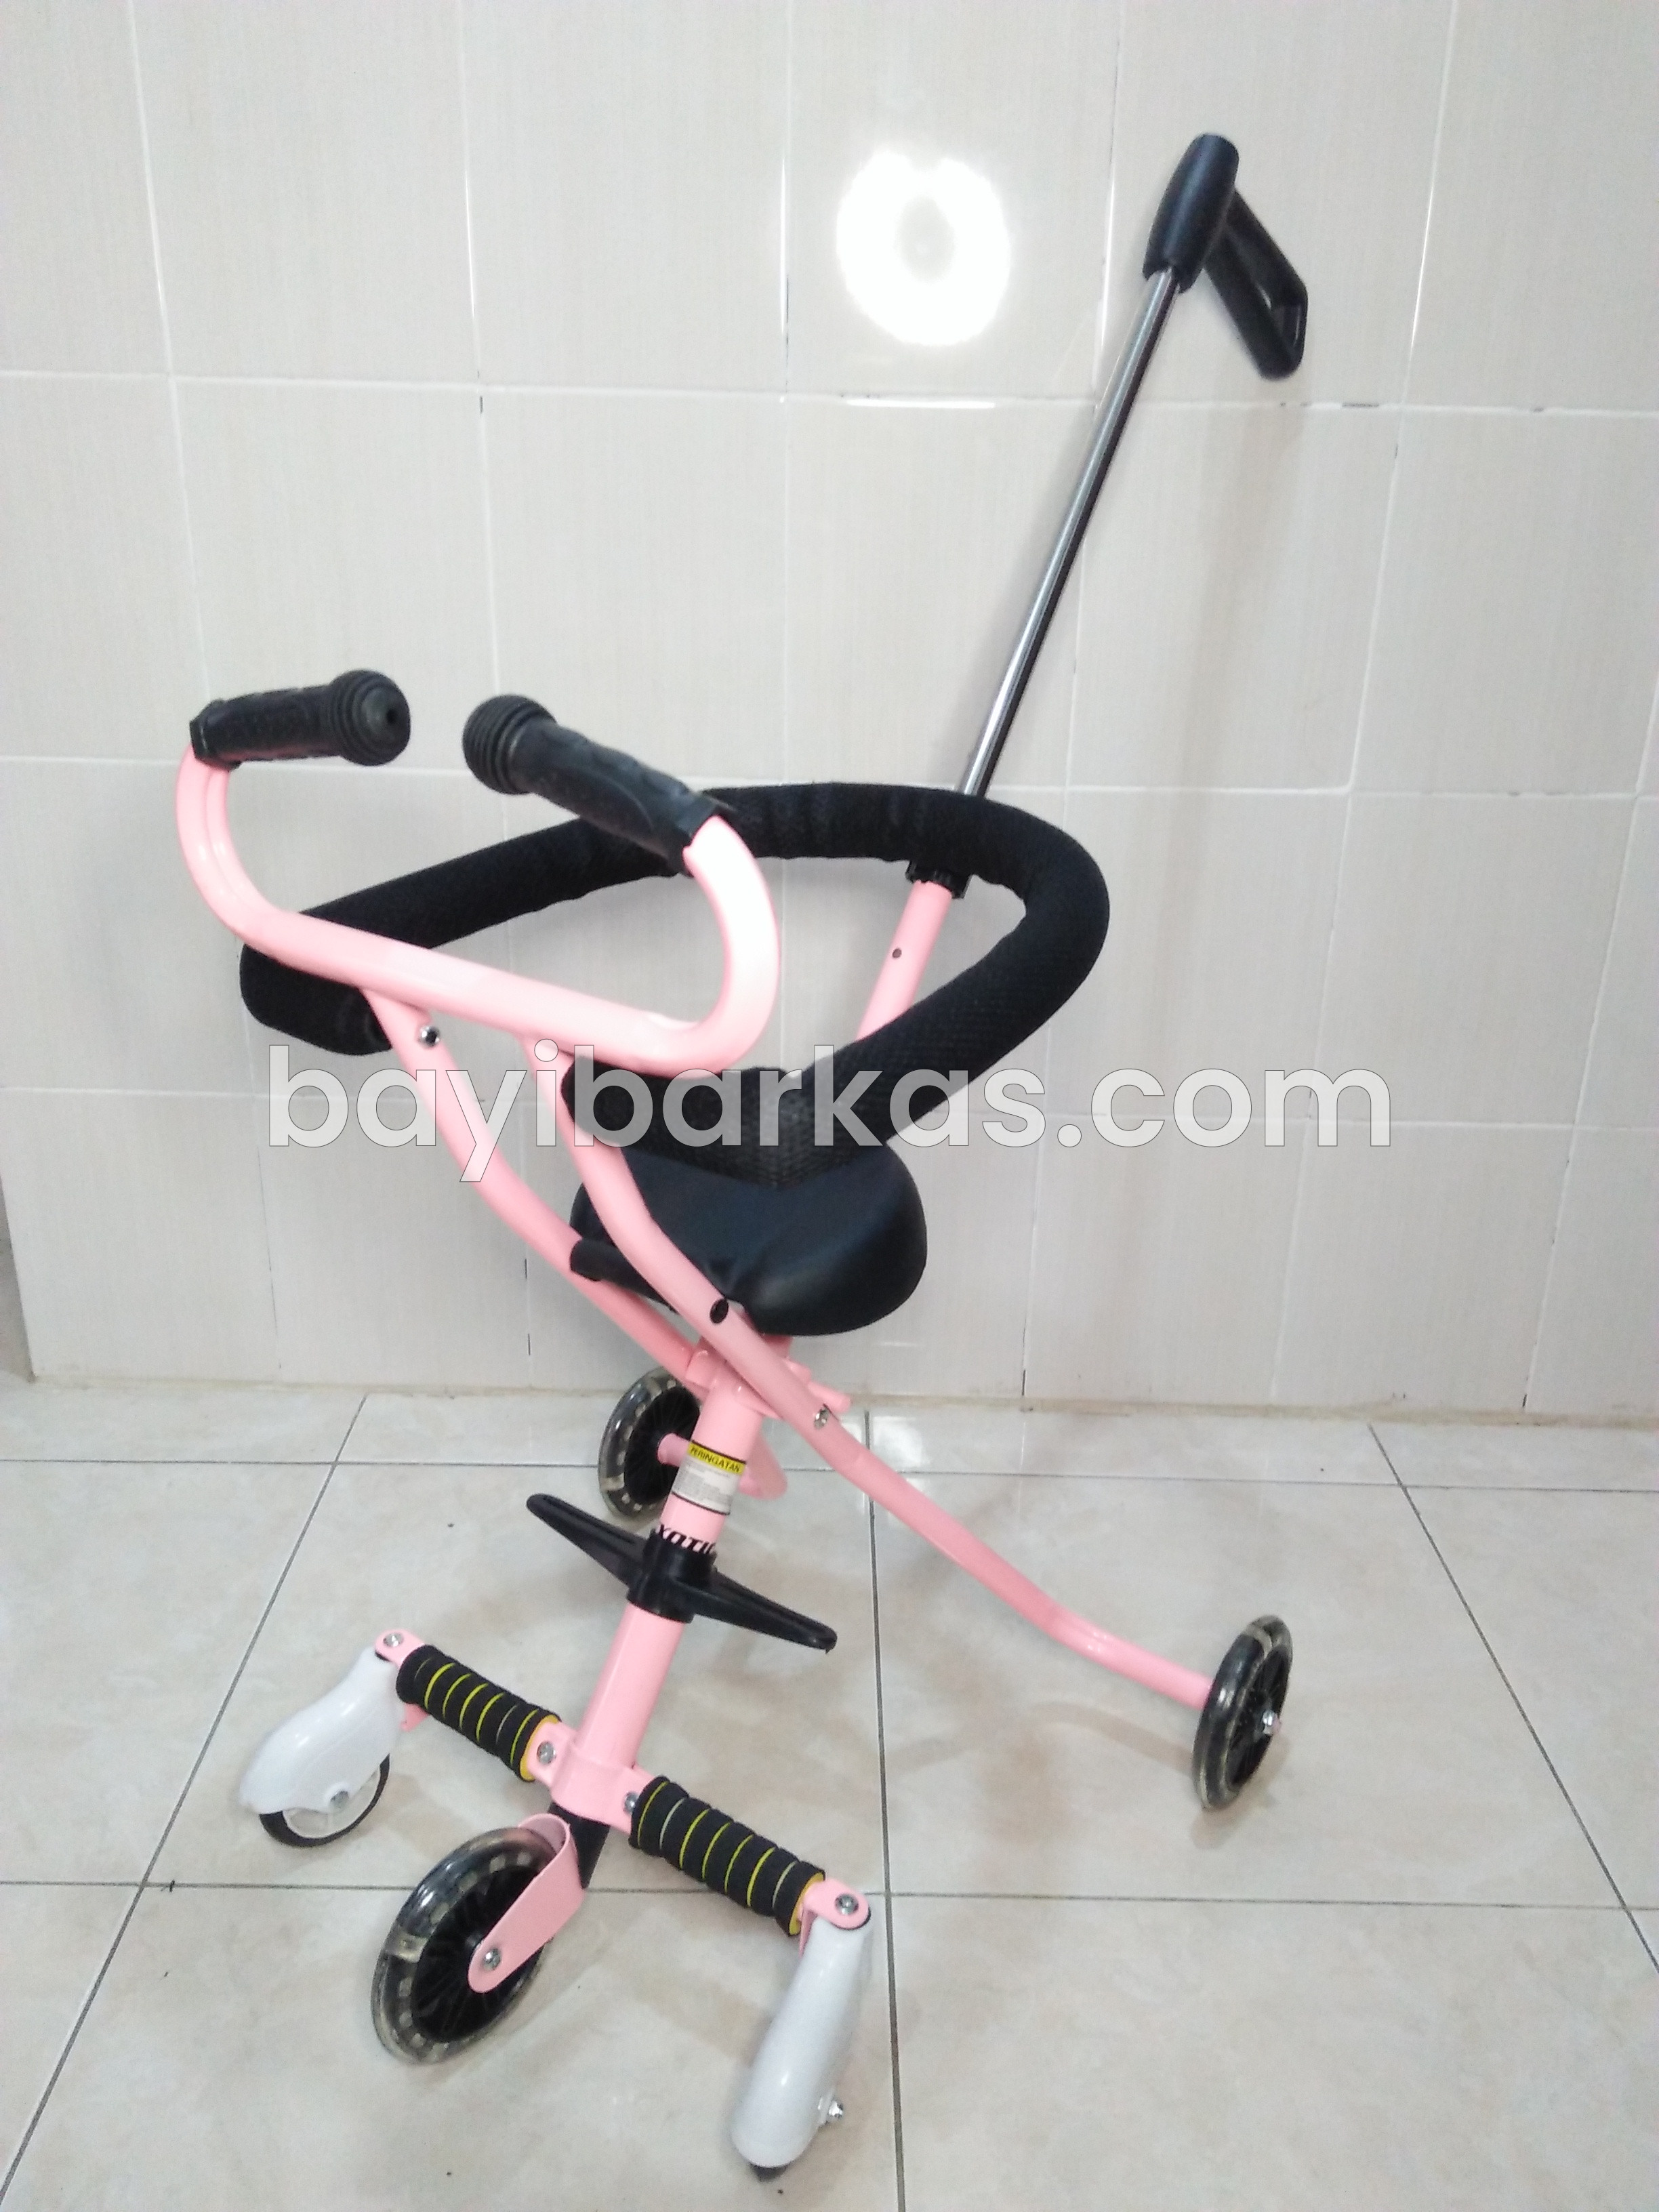 Stroller Micro Trike merk EXOTIC 'LW-008' *NEW (KPF)